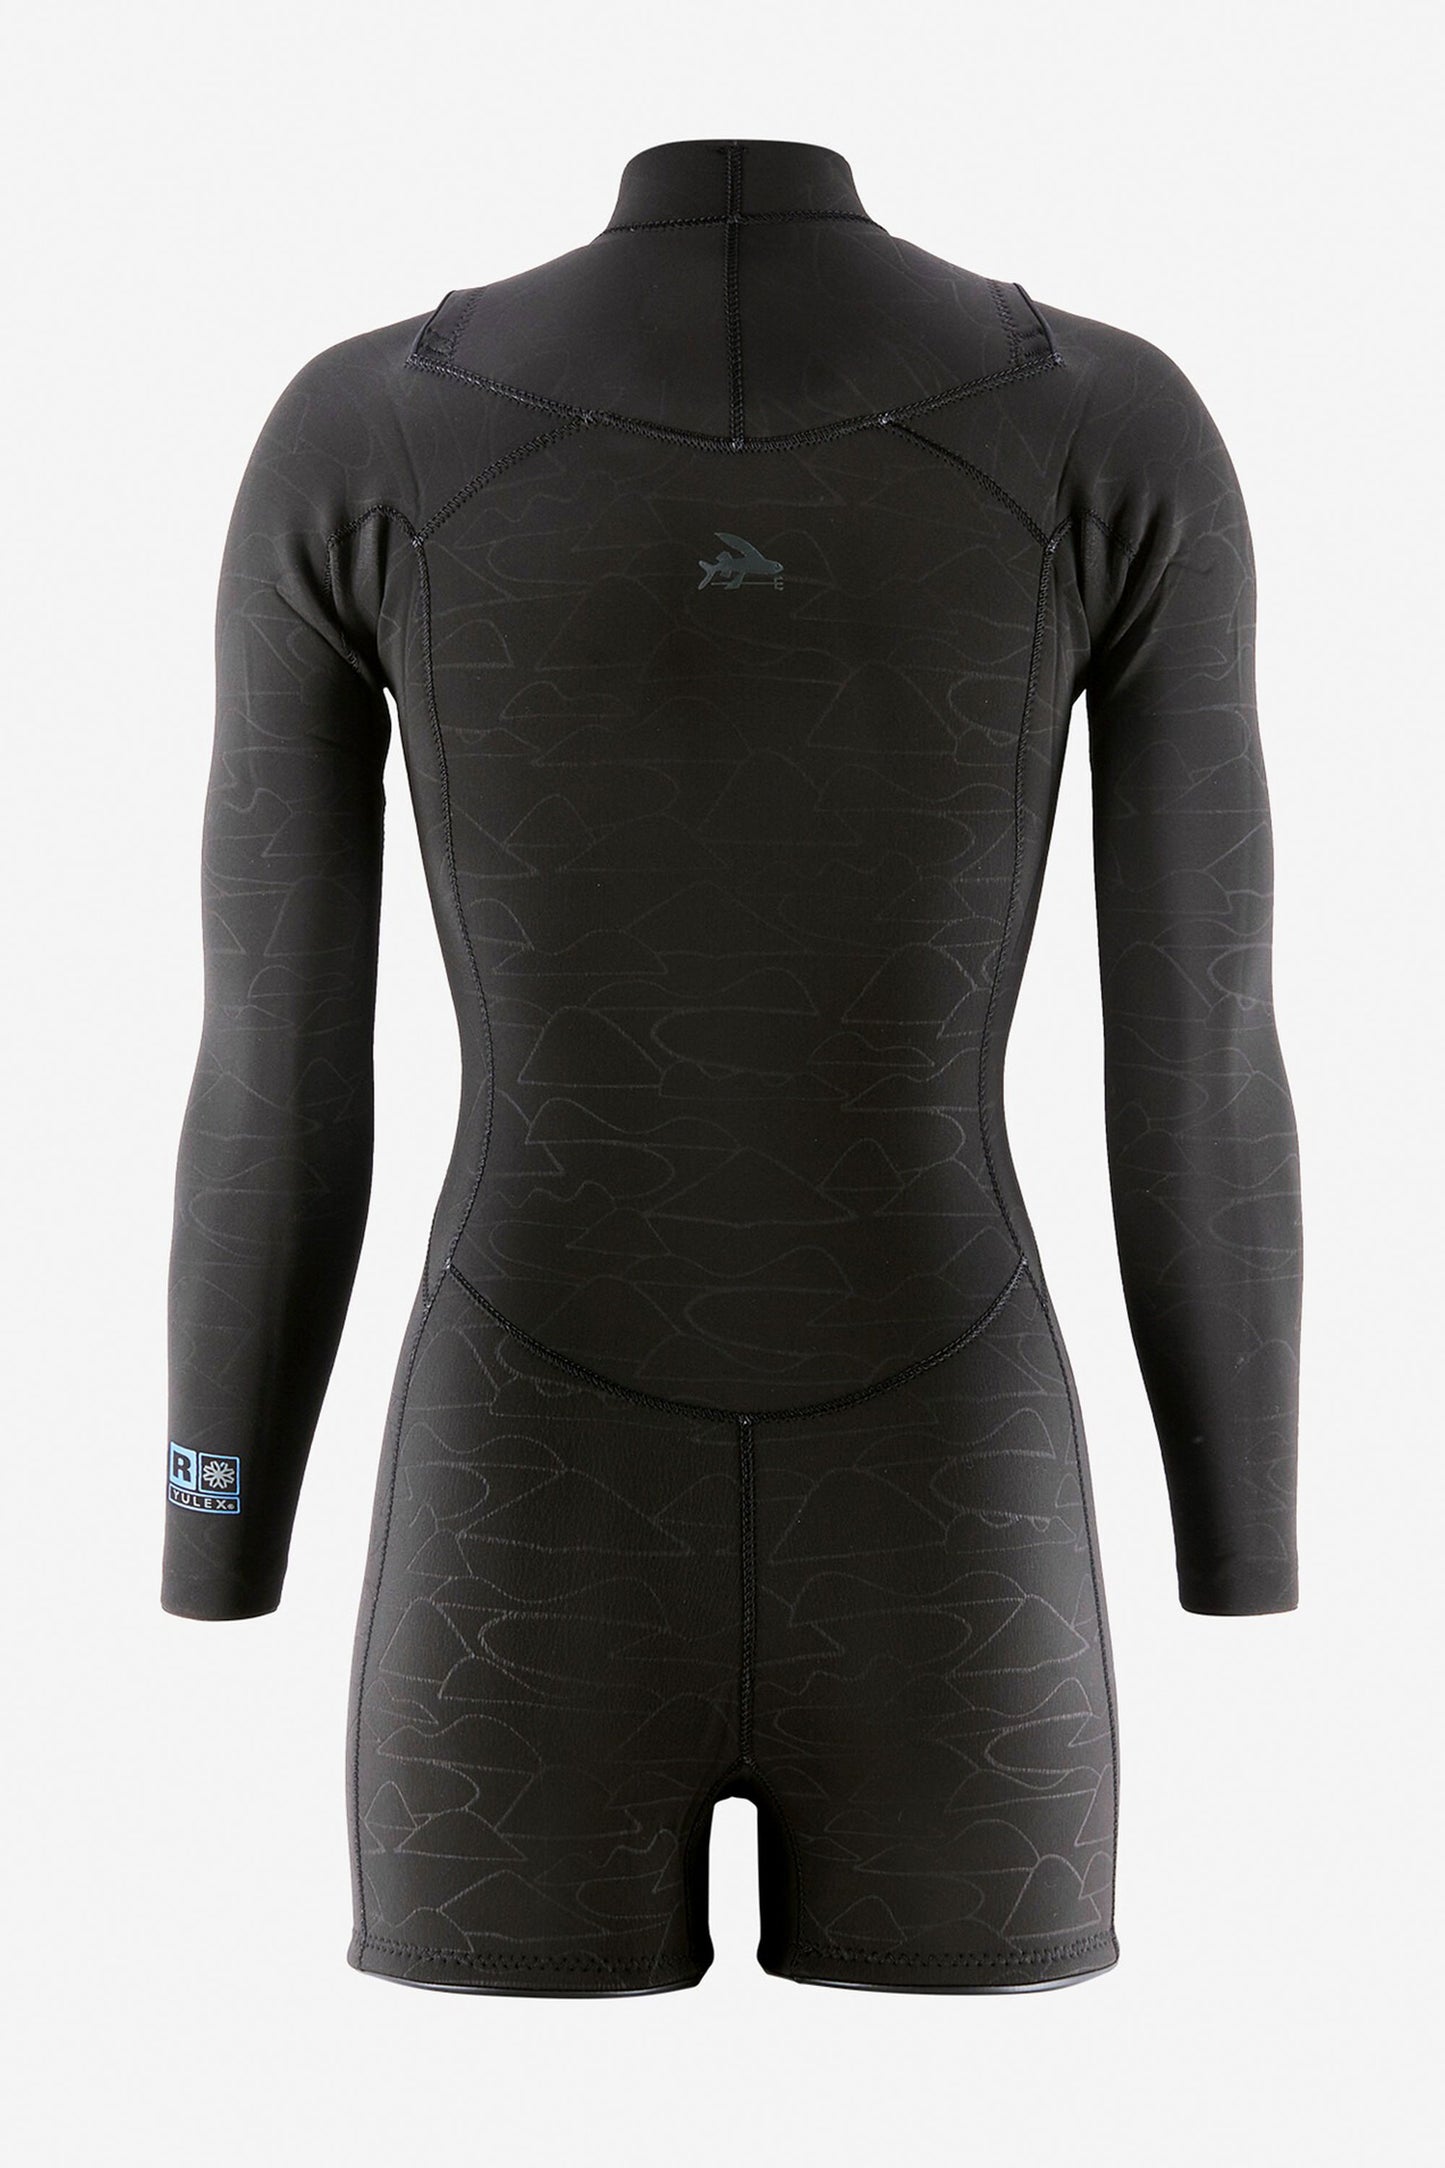     Pukas-Surf-Shop-patagonis-wetsuit-R1-Lite-Yulex-2mm-Long-Sleeve-Spring